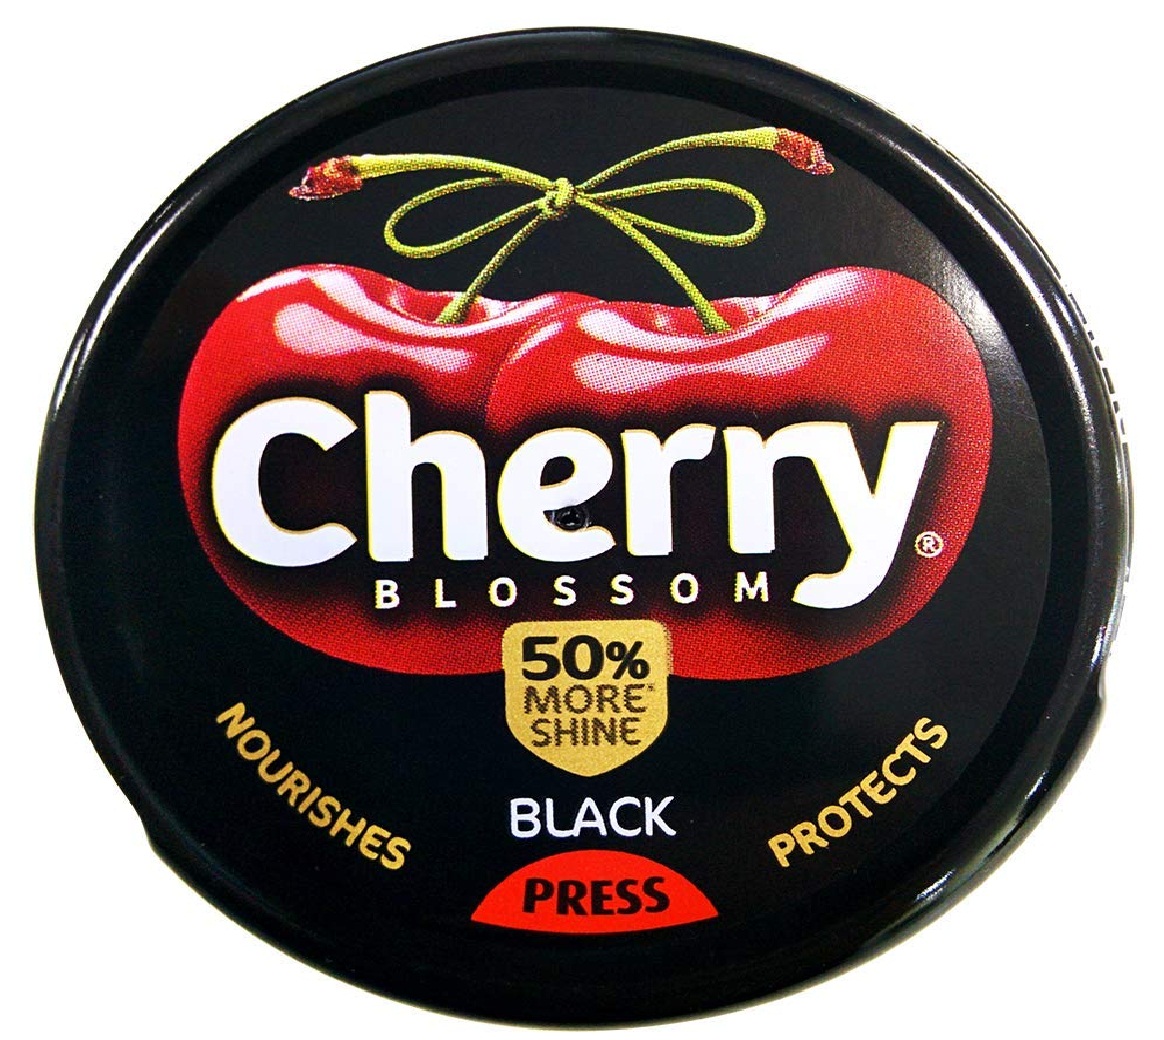 Cherry Blossom Shoe Polish - Black, 40 gm